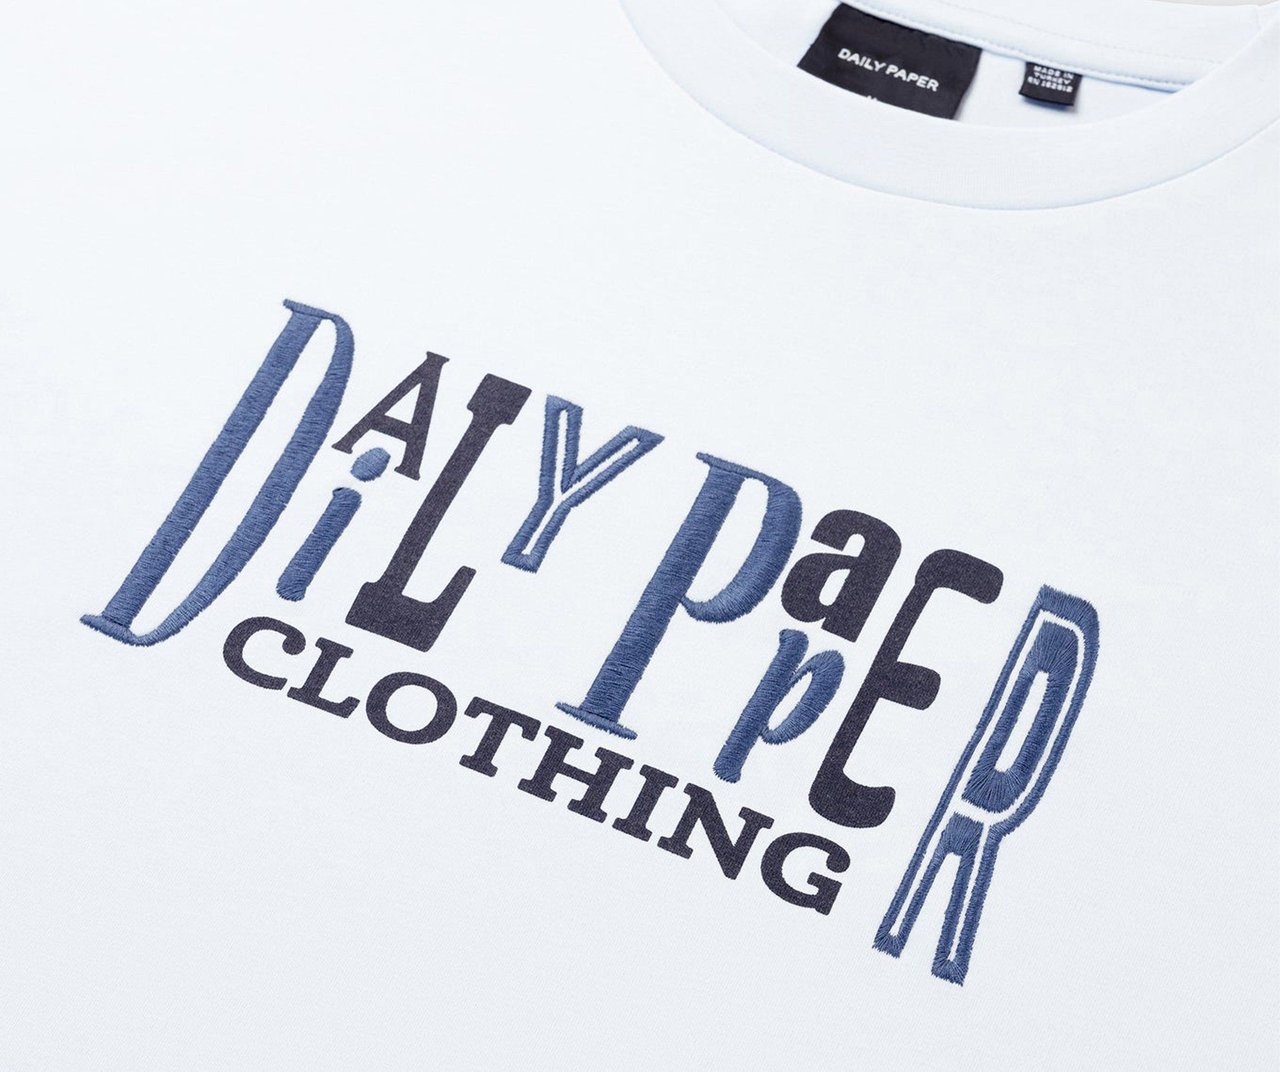 Daily Paper T-shirt Blauw